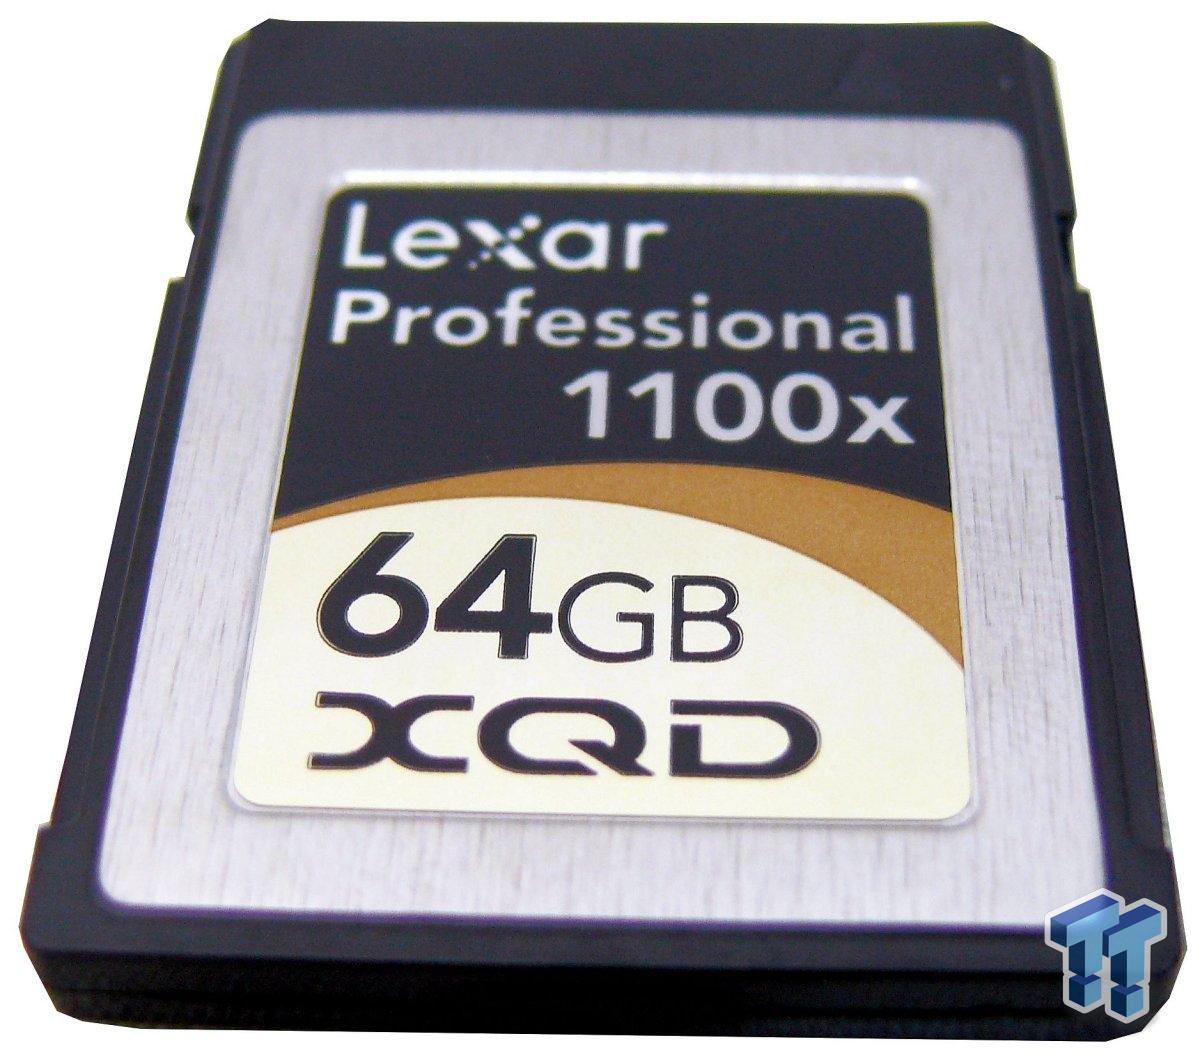 Cartes Lexar Professional 1100x XQD 32 Go et 64 Go - Lecteur Lexar XQD